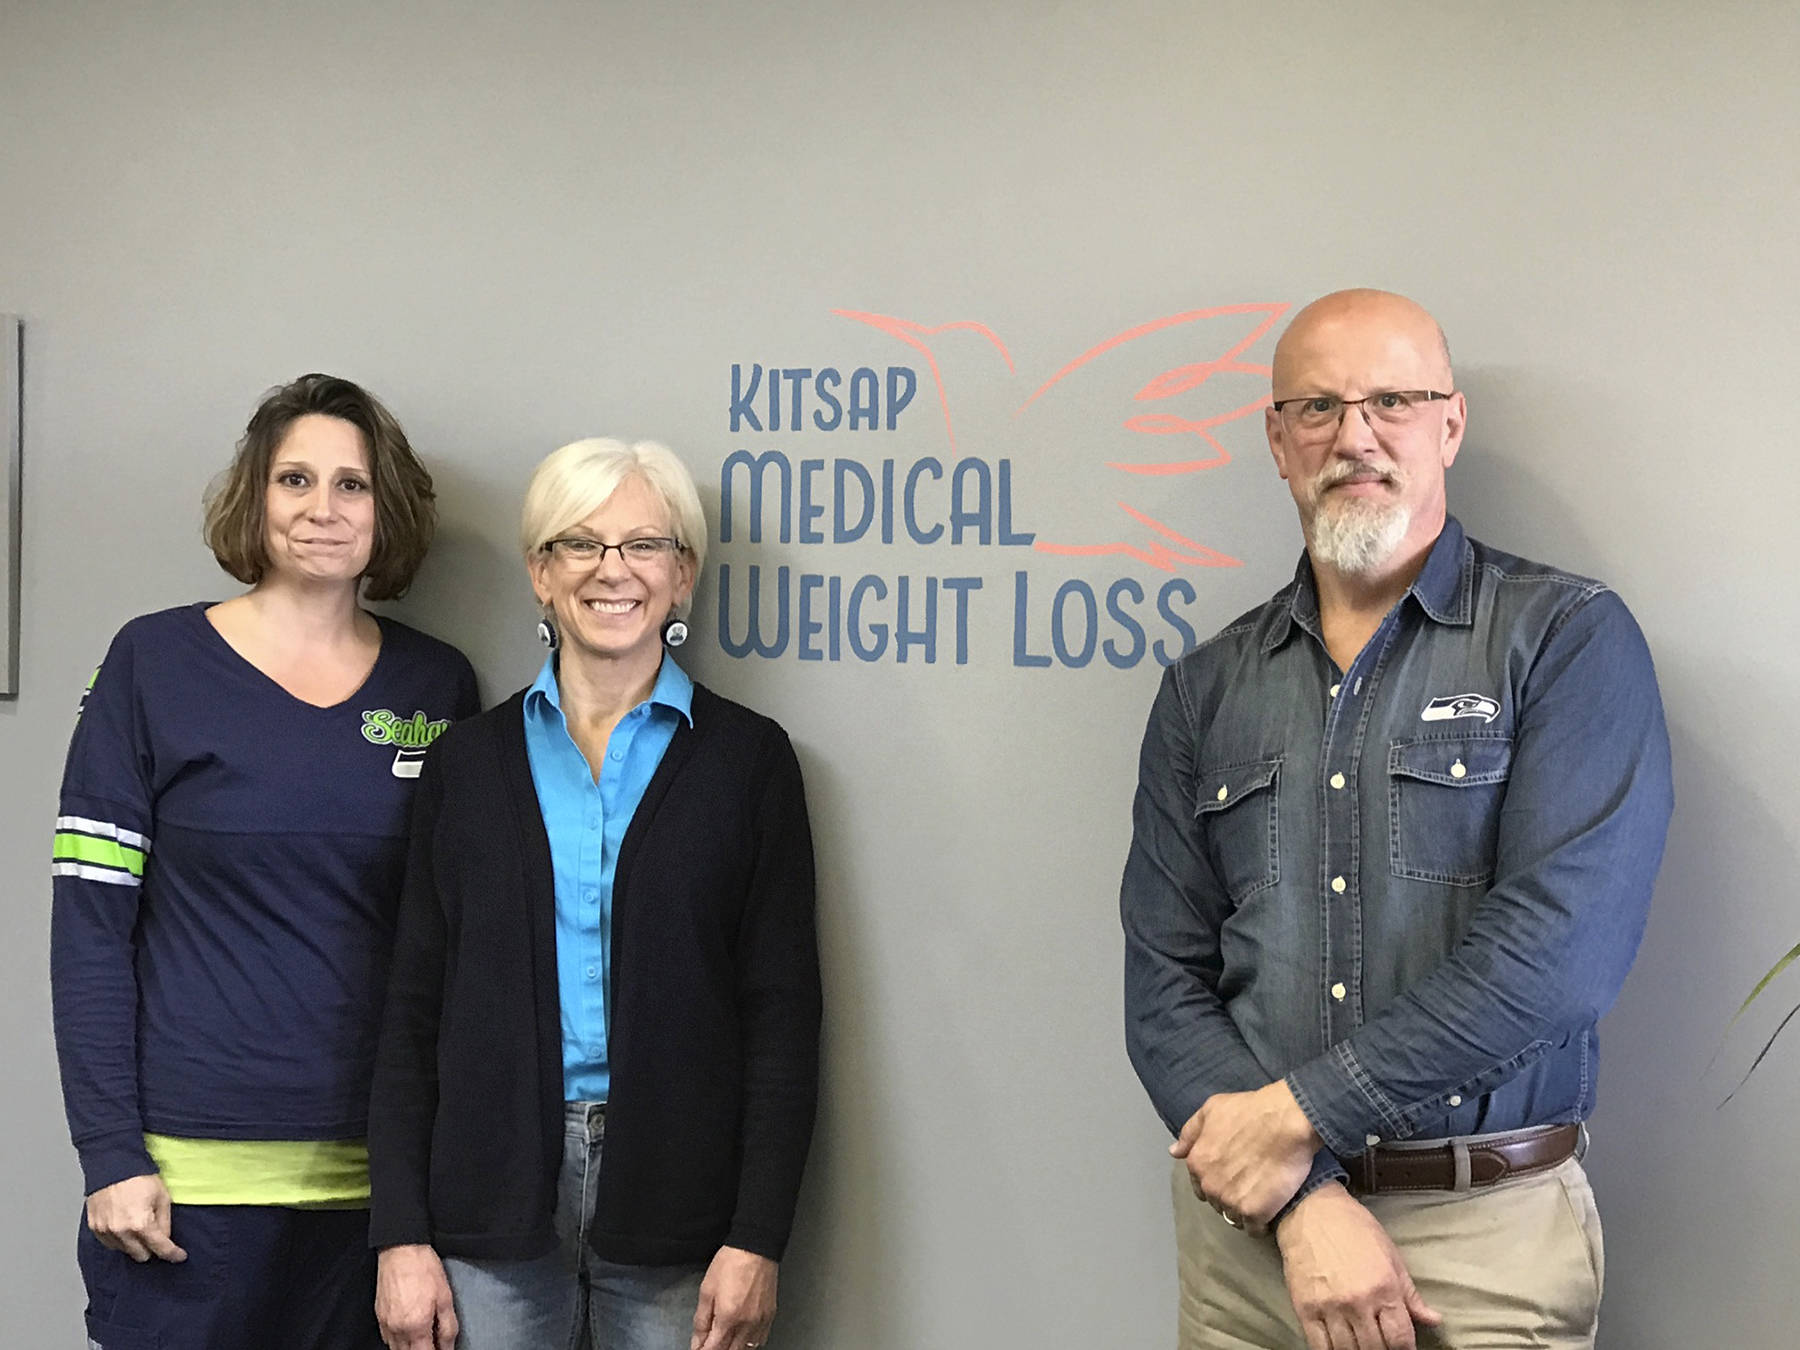 From left, Susanna Molina, Dr. Ellen K. Stehouwer, and Jason Mange of Kitsap Medical Weight Loss. Leslie Kelly/Kitsap News Group